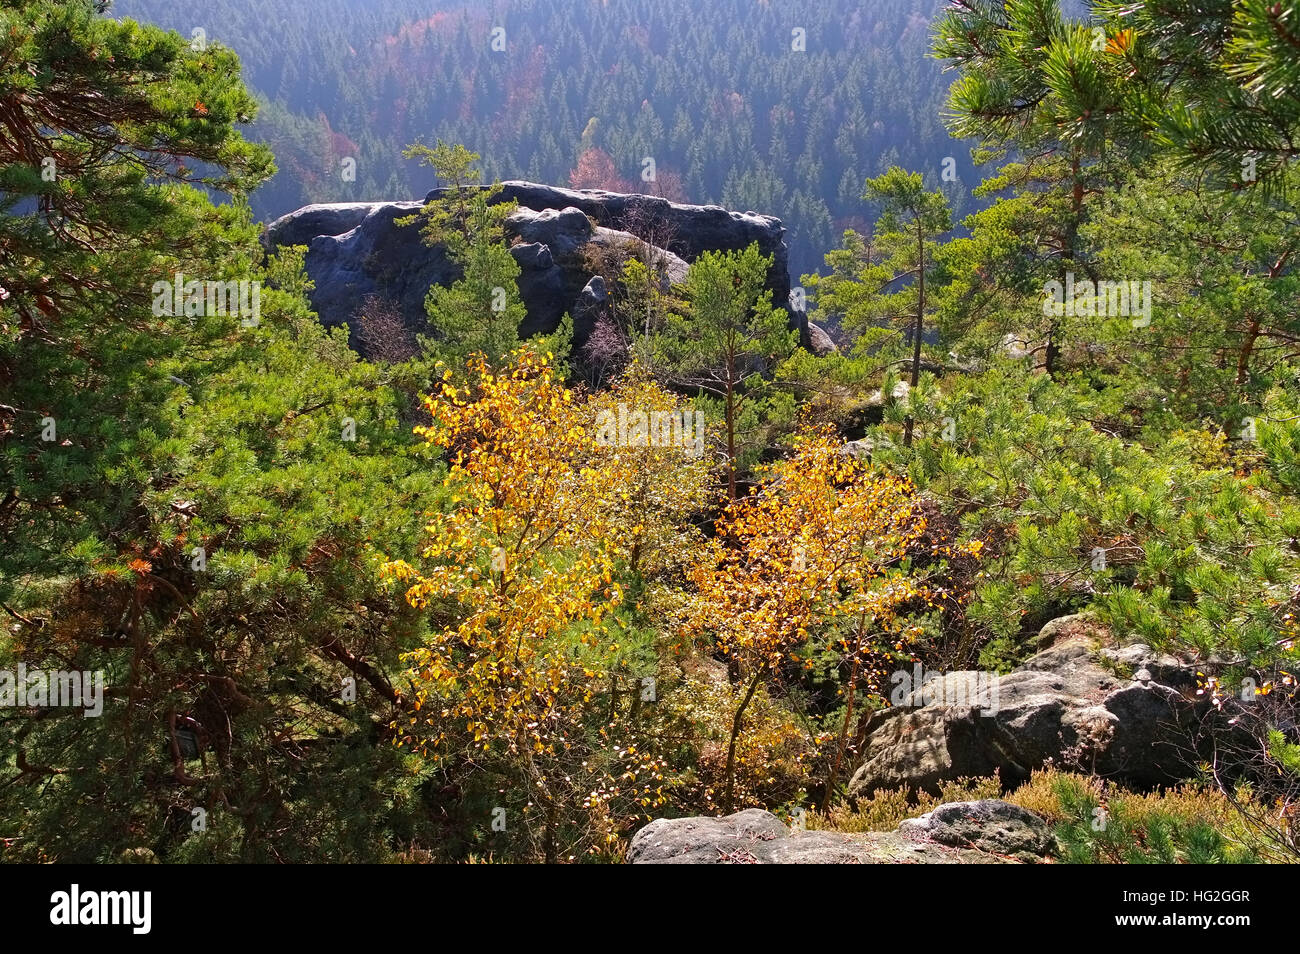 Elbsandsteingebirge - rock in Elbe Sandstone Mountains, Saxony Stock Photo